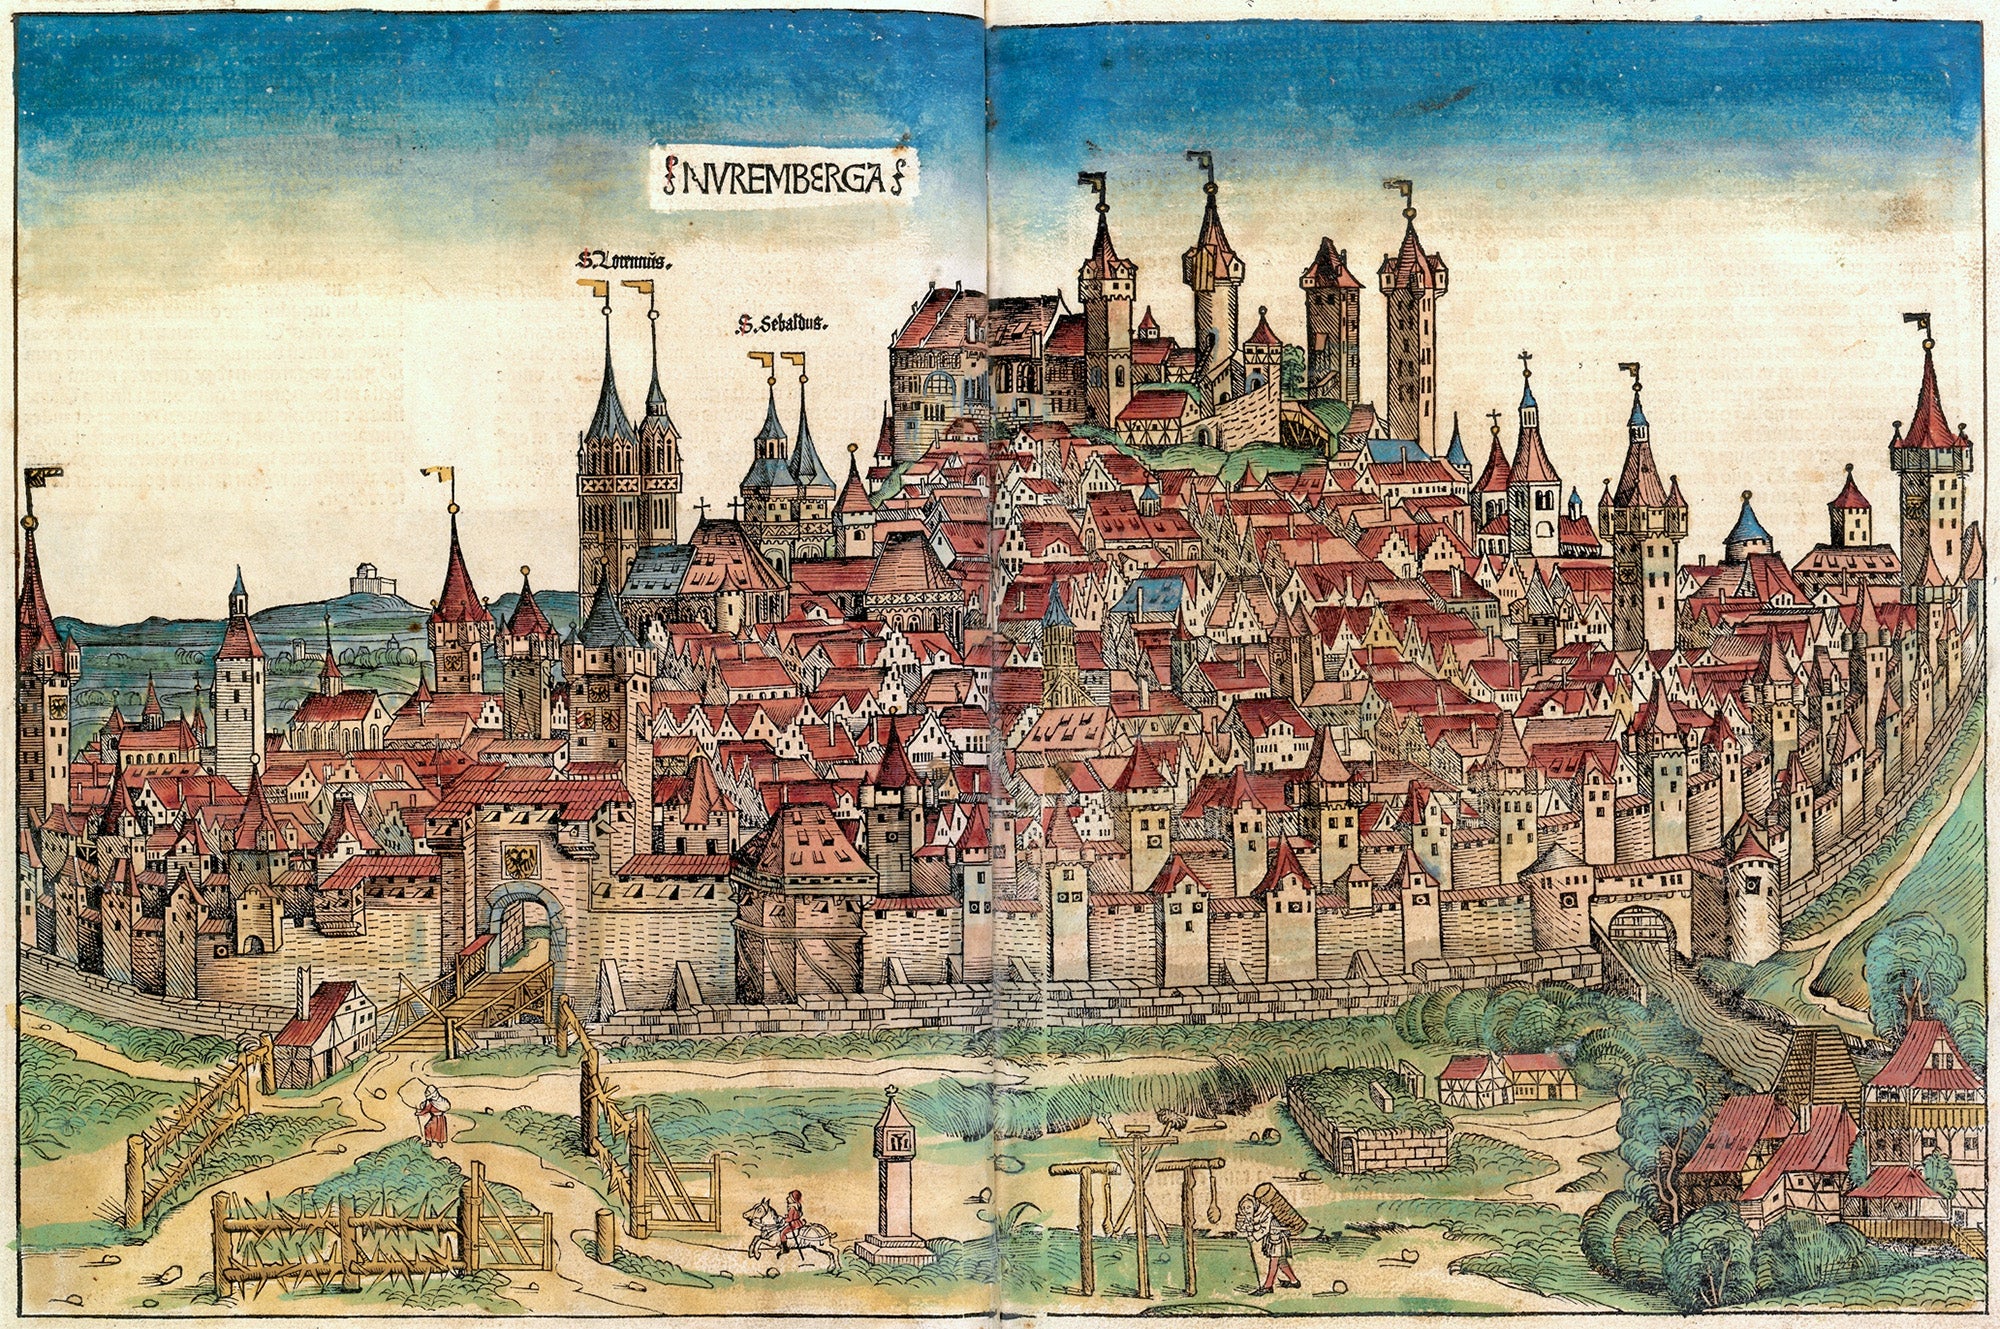 Woodcut of Nuremberg from the Nuremberg Chronicle, 1493